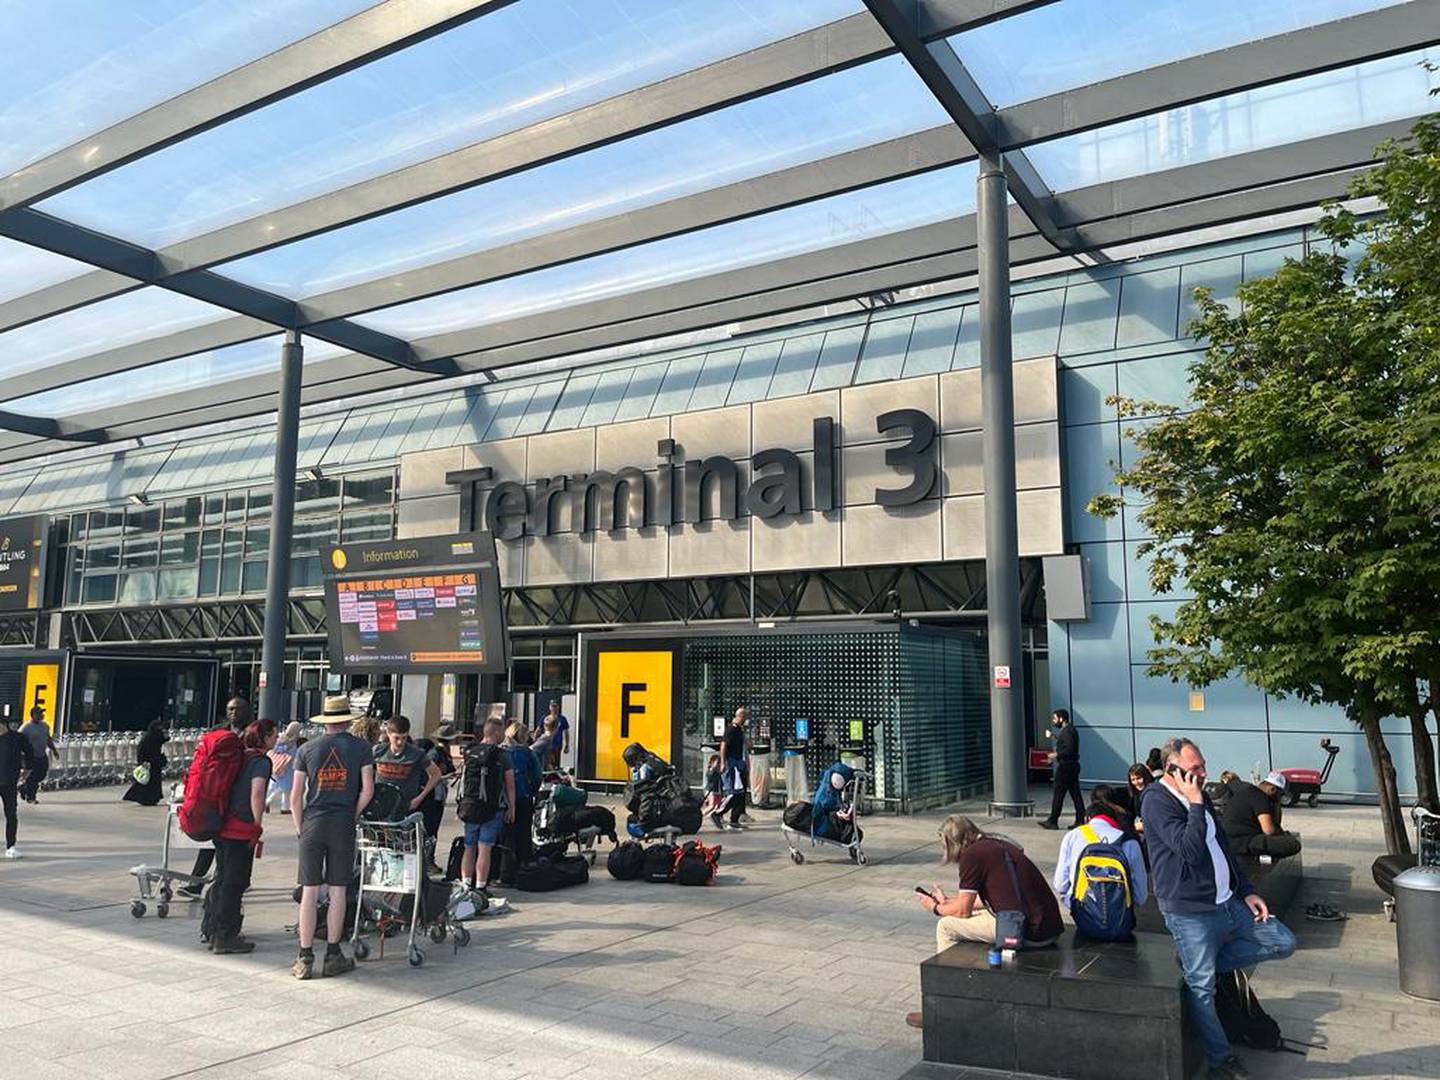 The entrance to Terminal 3 of Heathrow. Paul Carey / The National